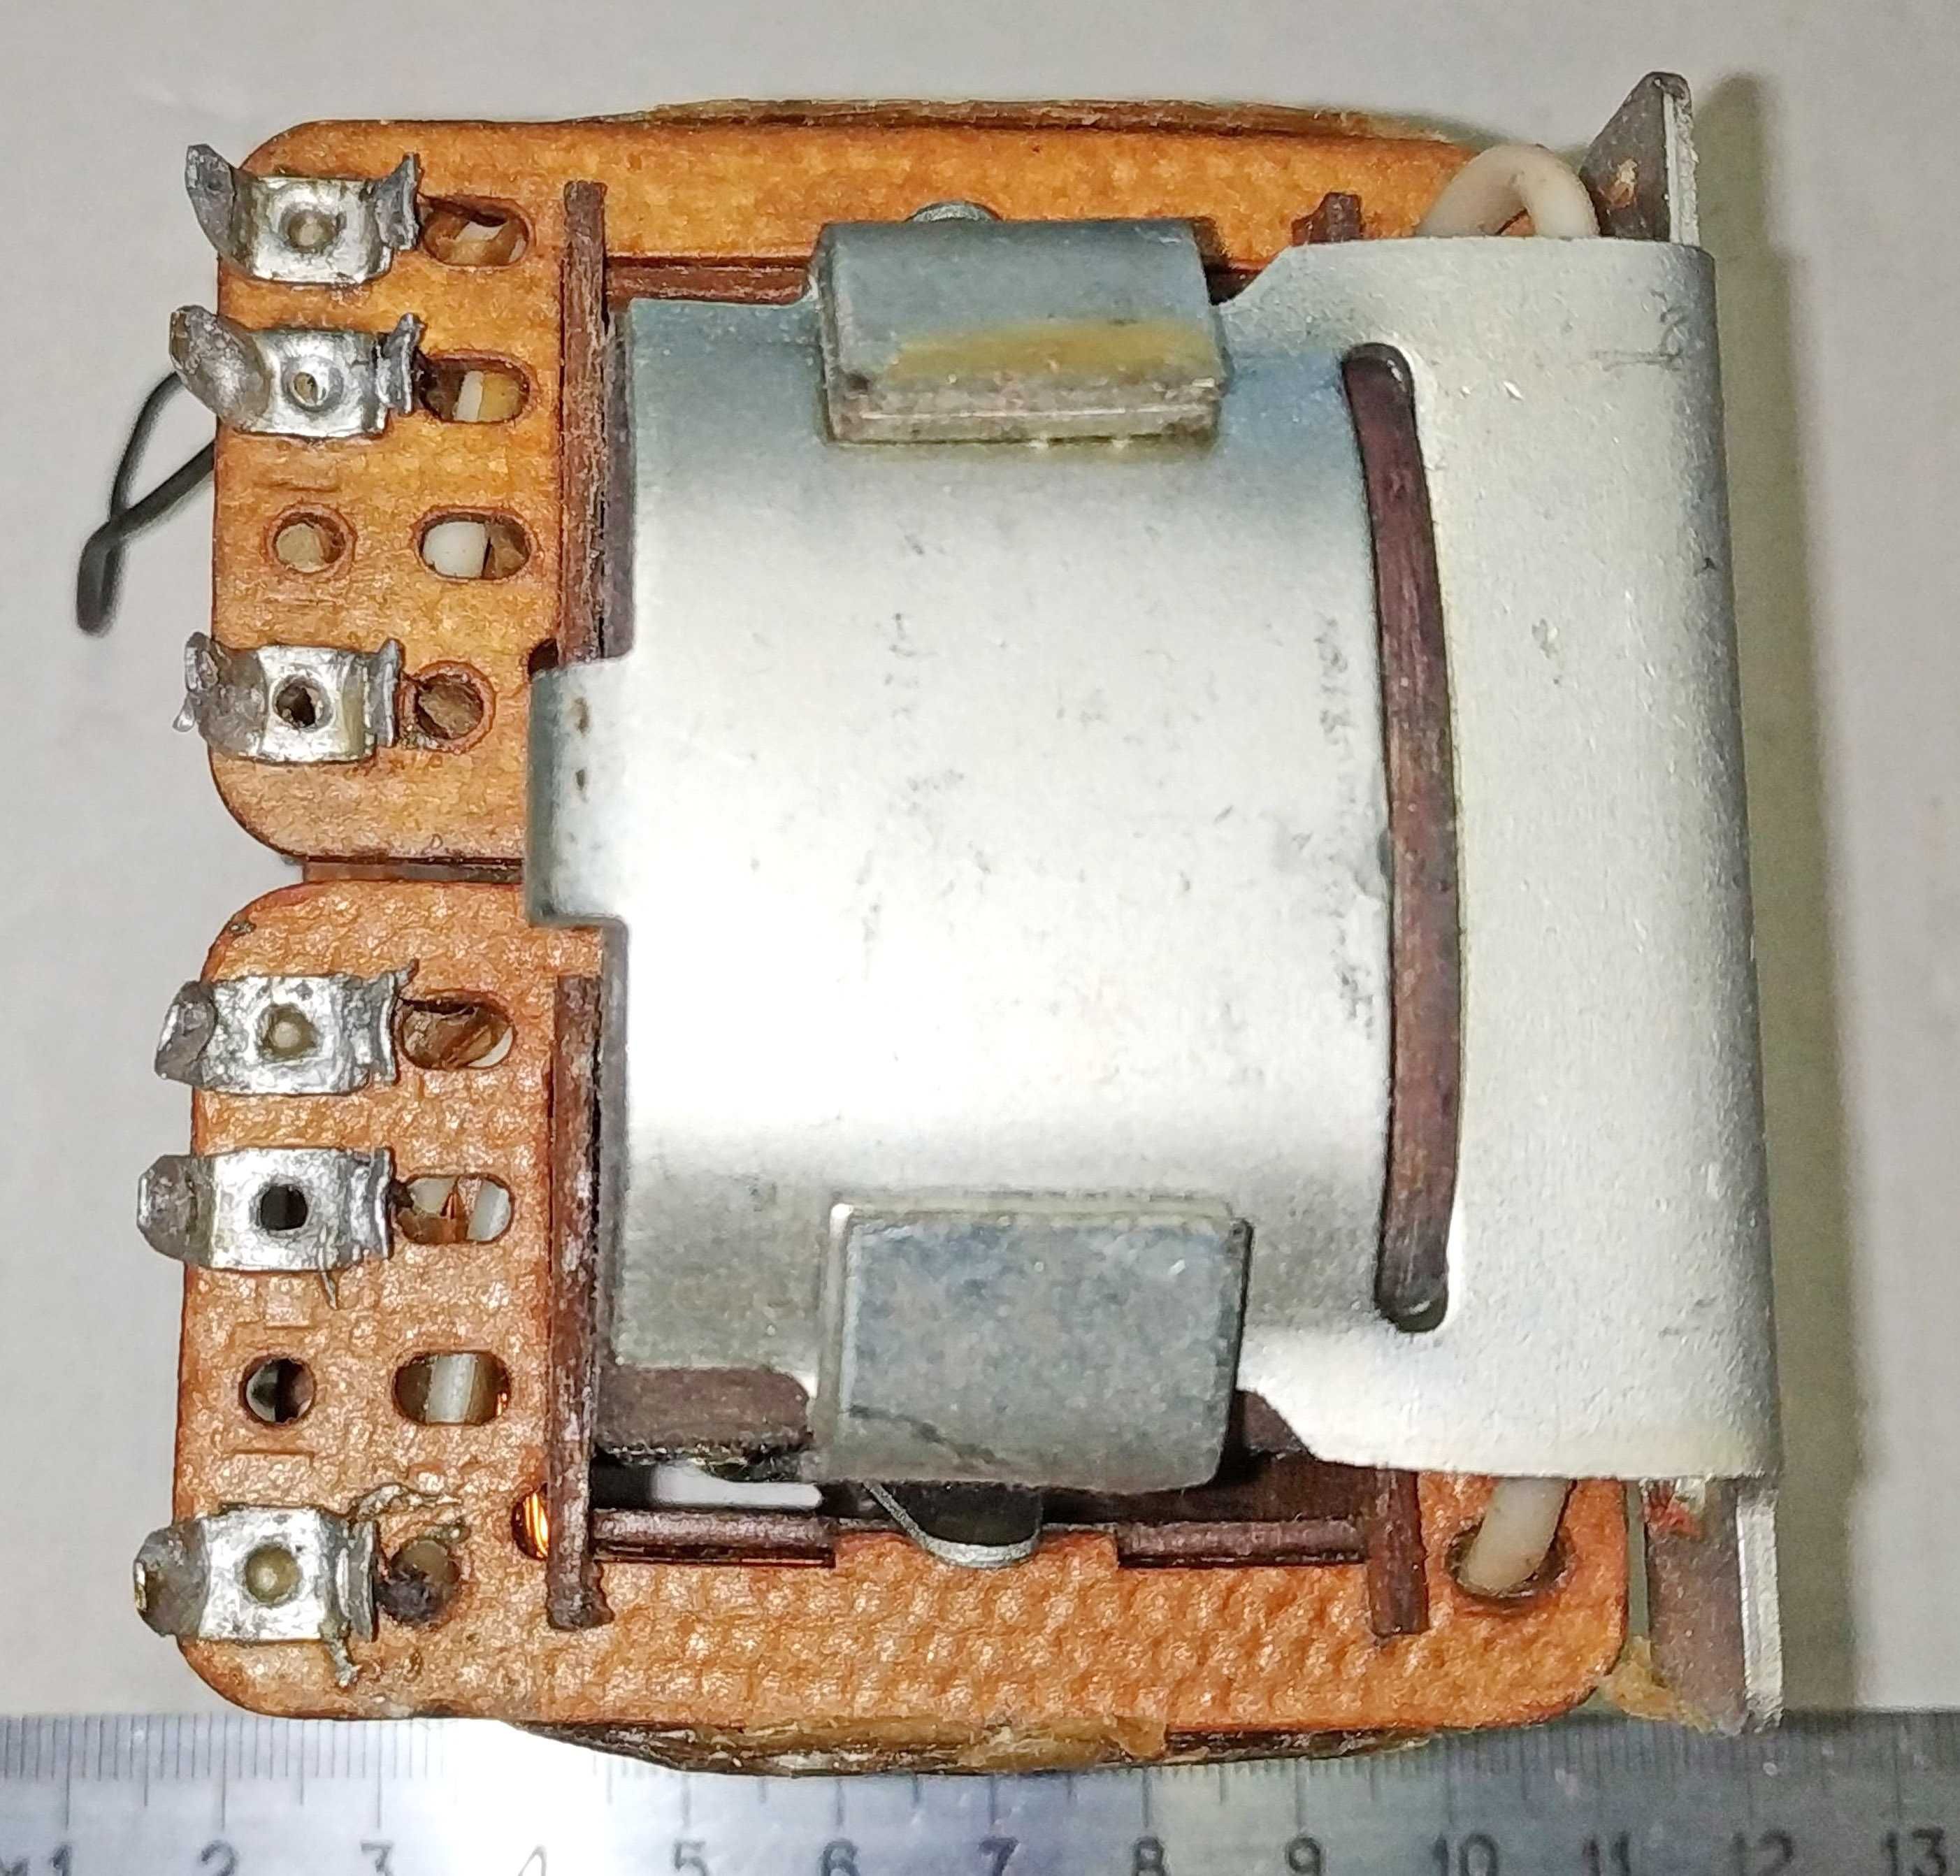 Трансформатор питания от кассетного магнитофона Маяк.